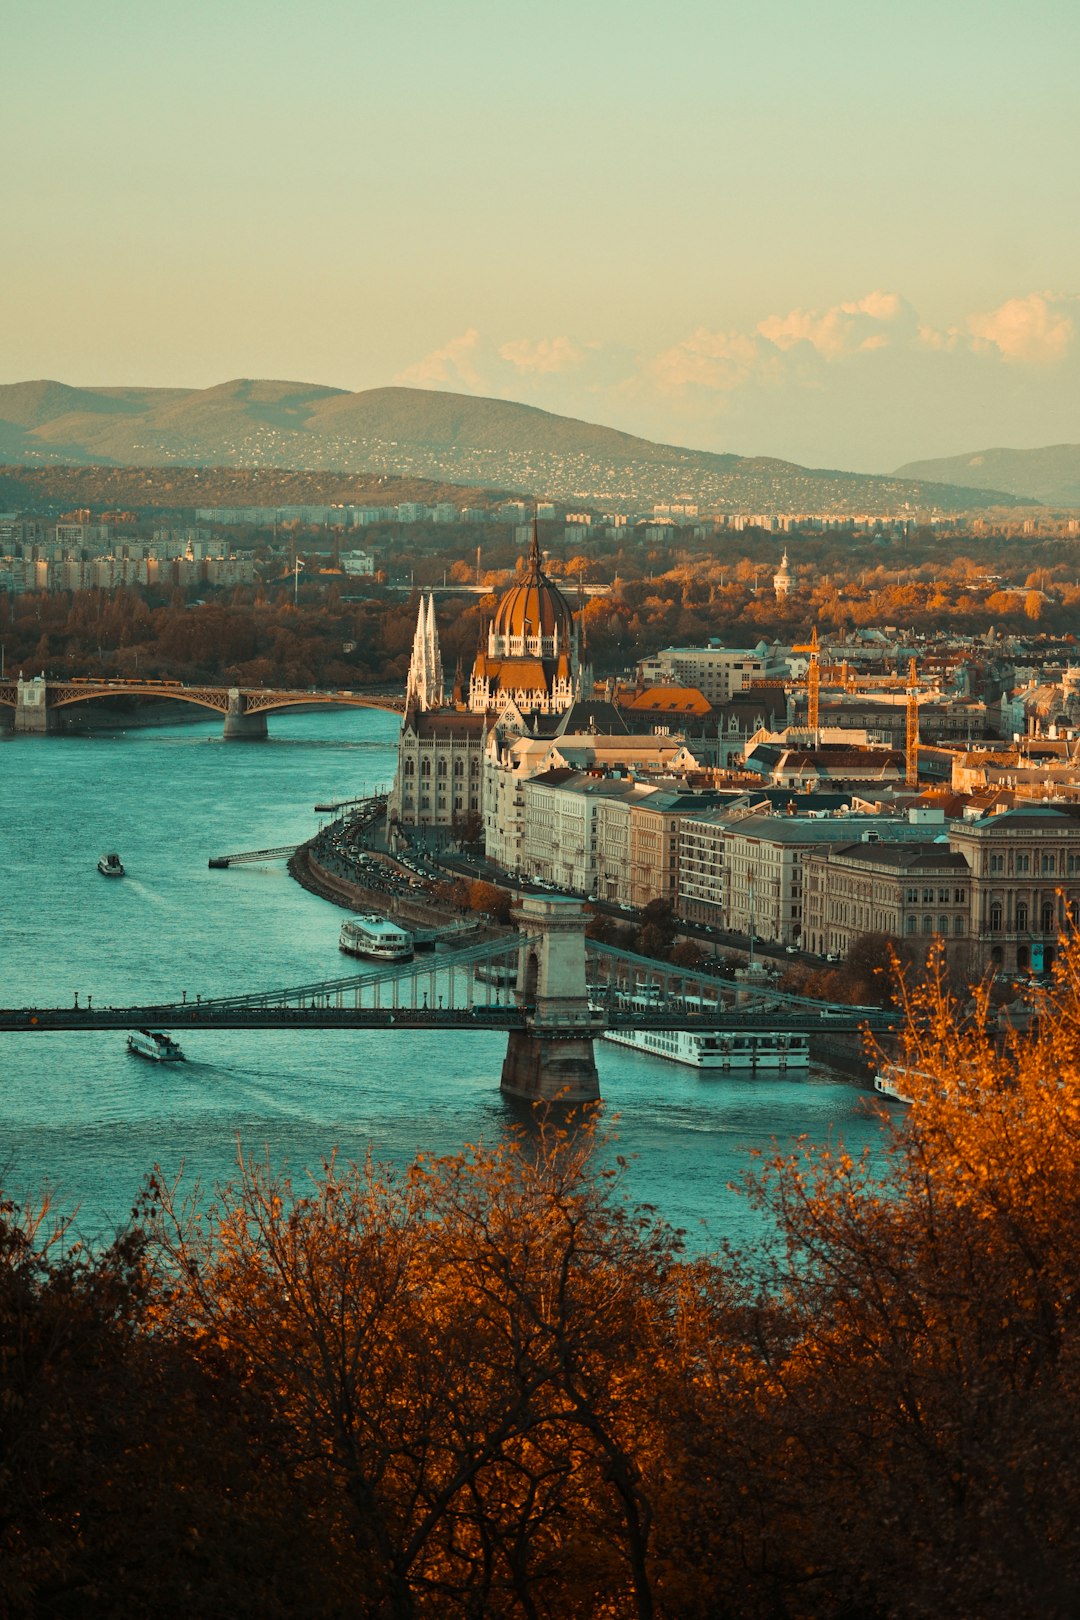 Budapest travel guide